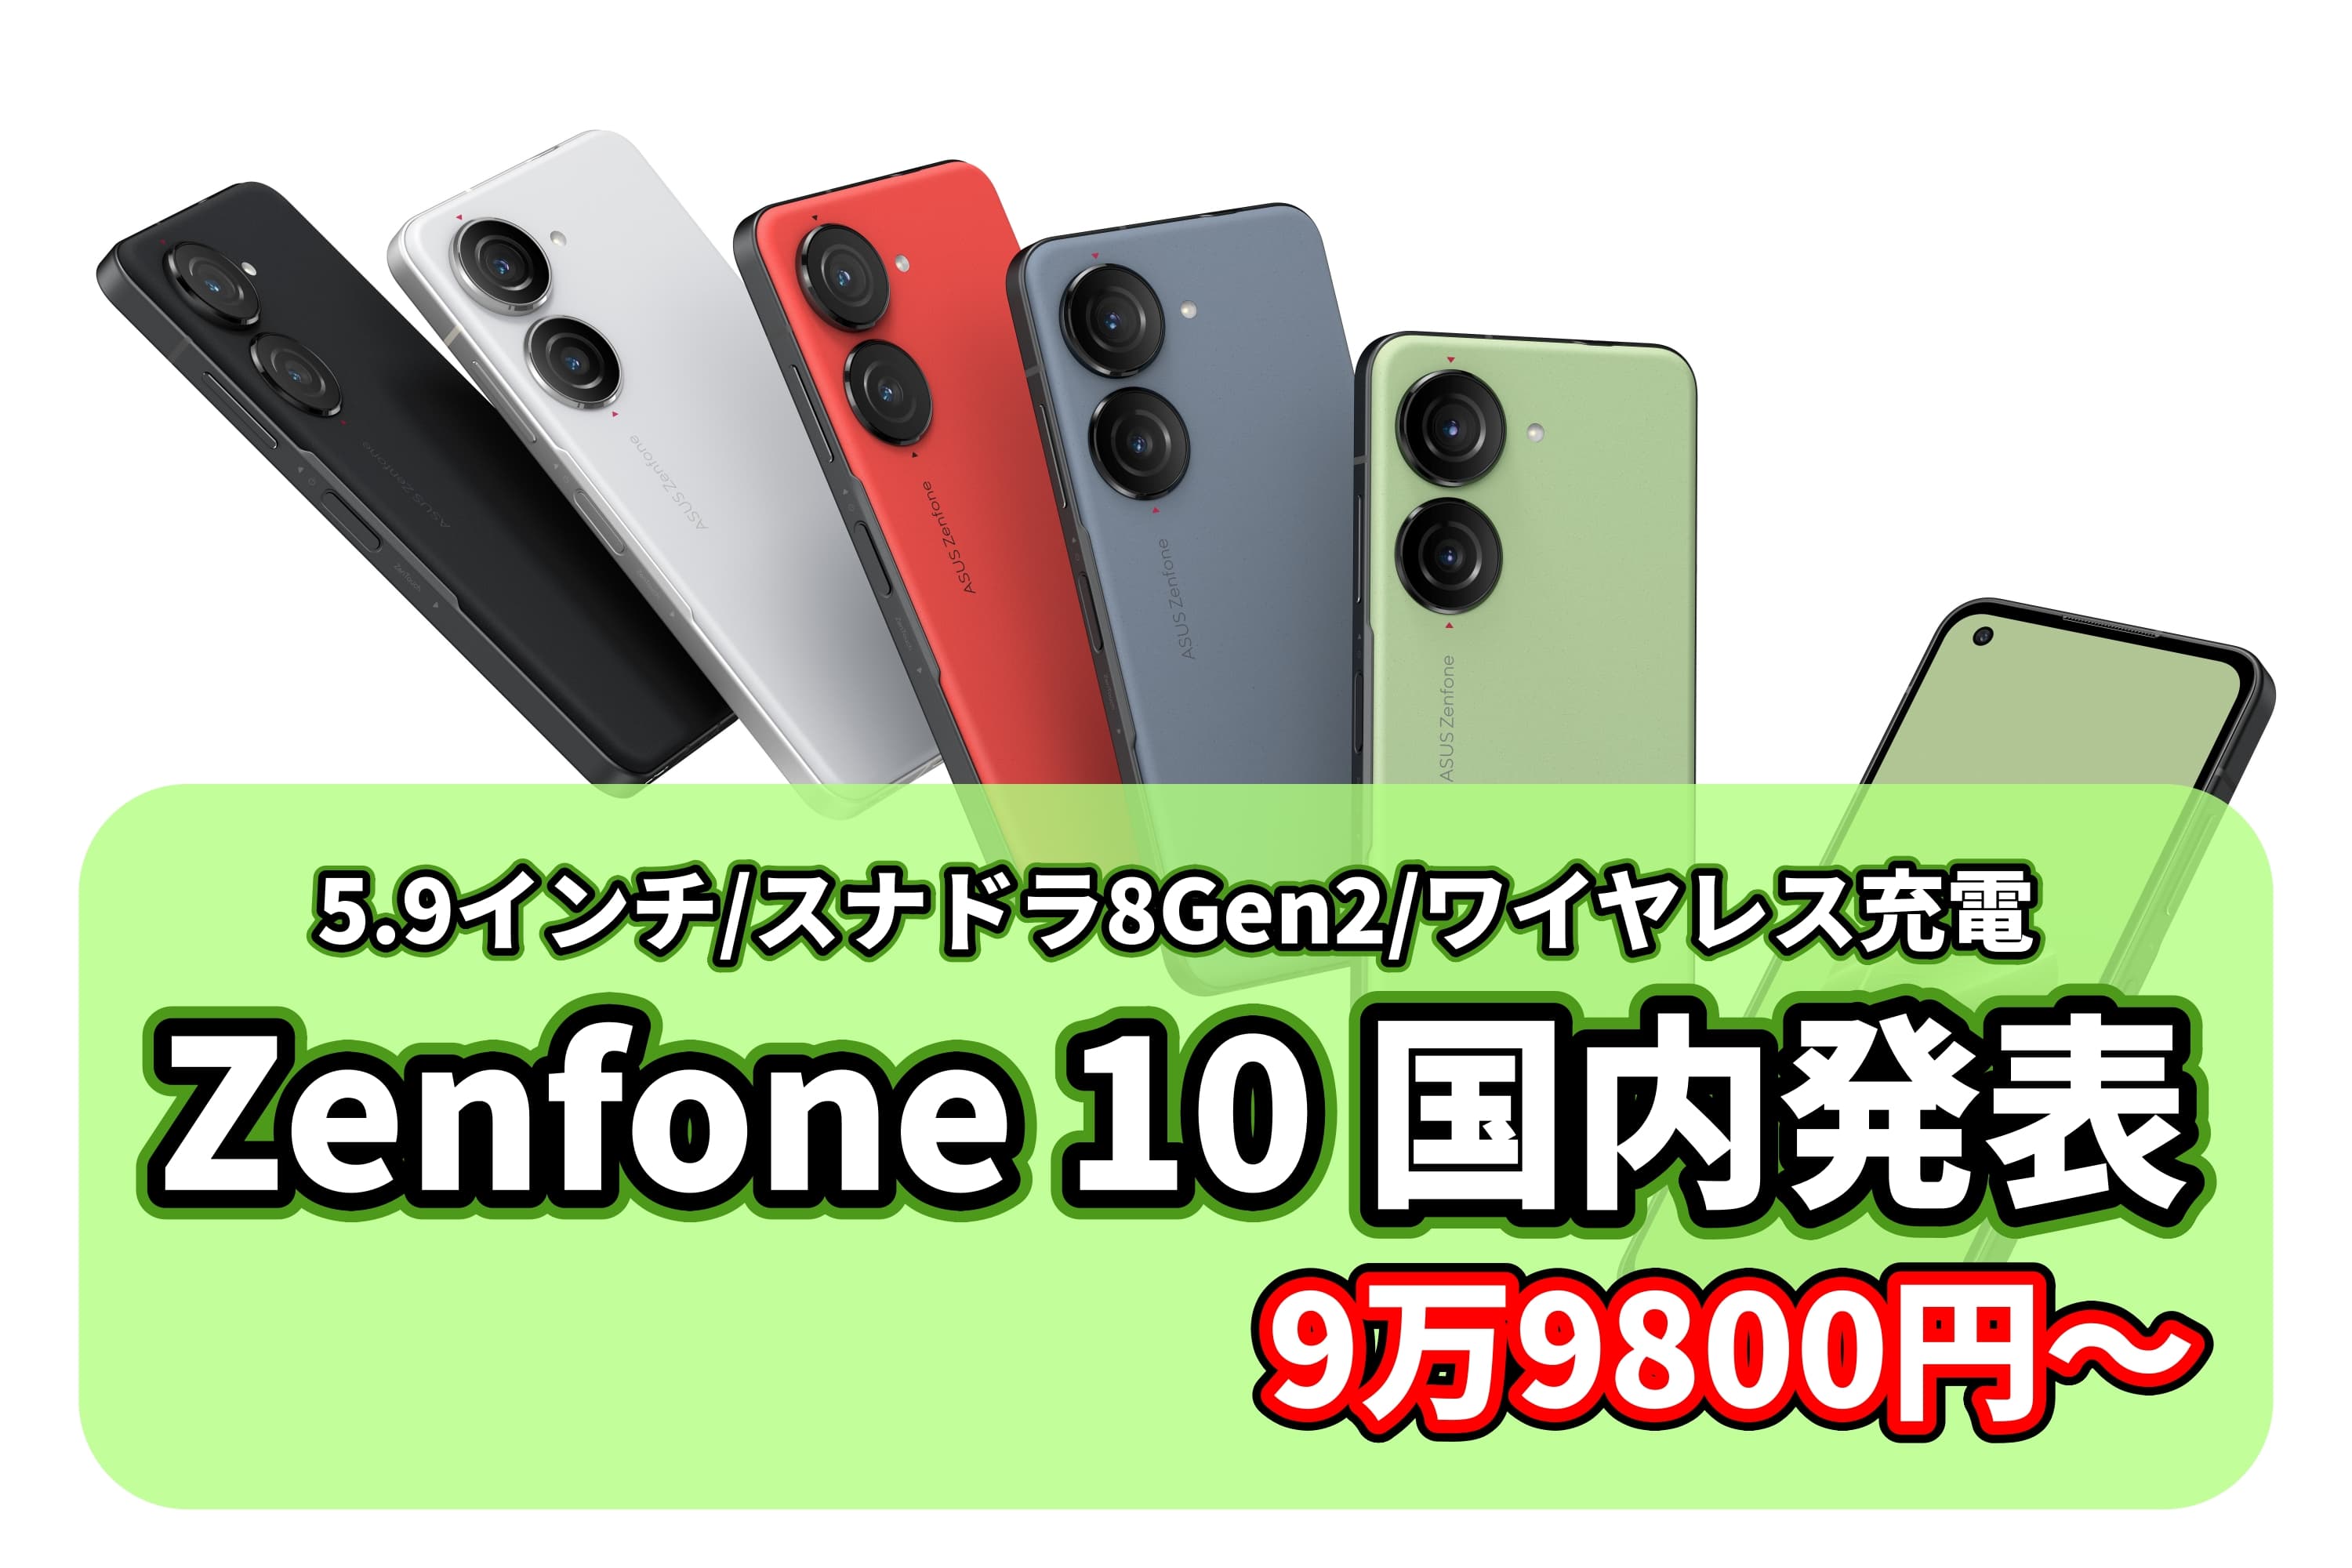 Zenfone 10 国内発表 コンパクト＆パワフル ワイヤレス充電対応 最廉価